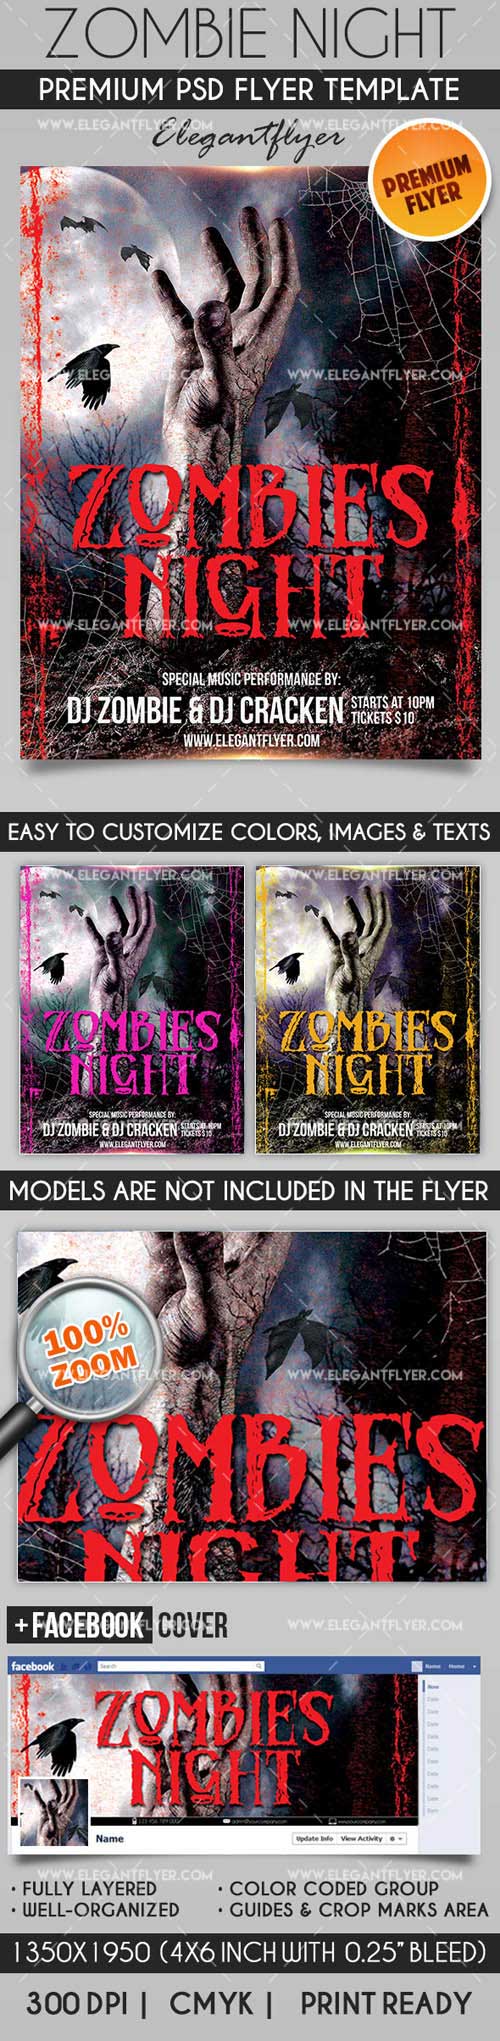 Zombie Night Flyer PSD Template